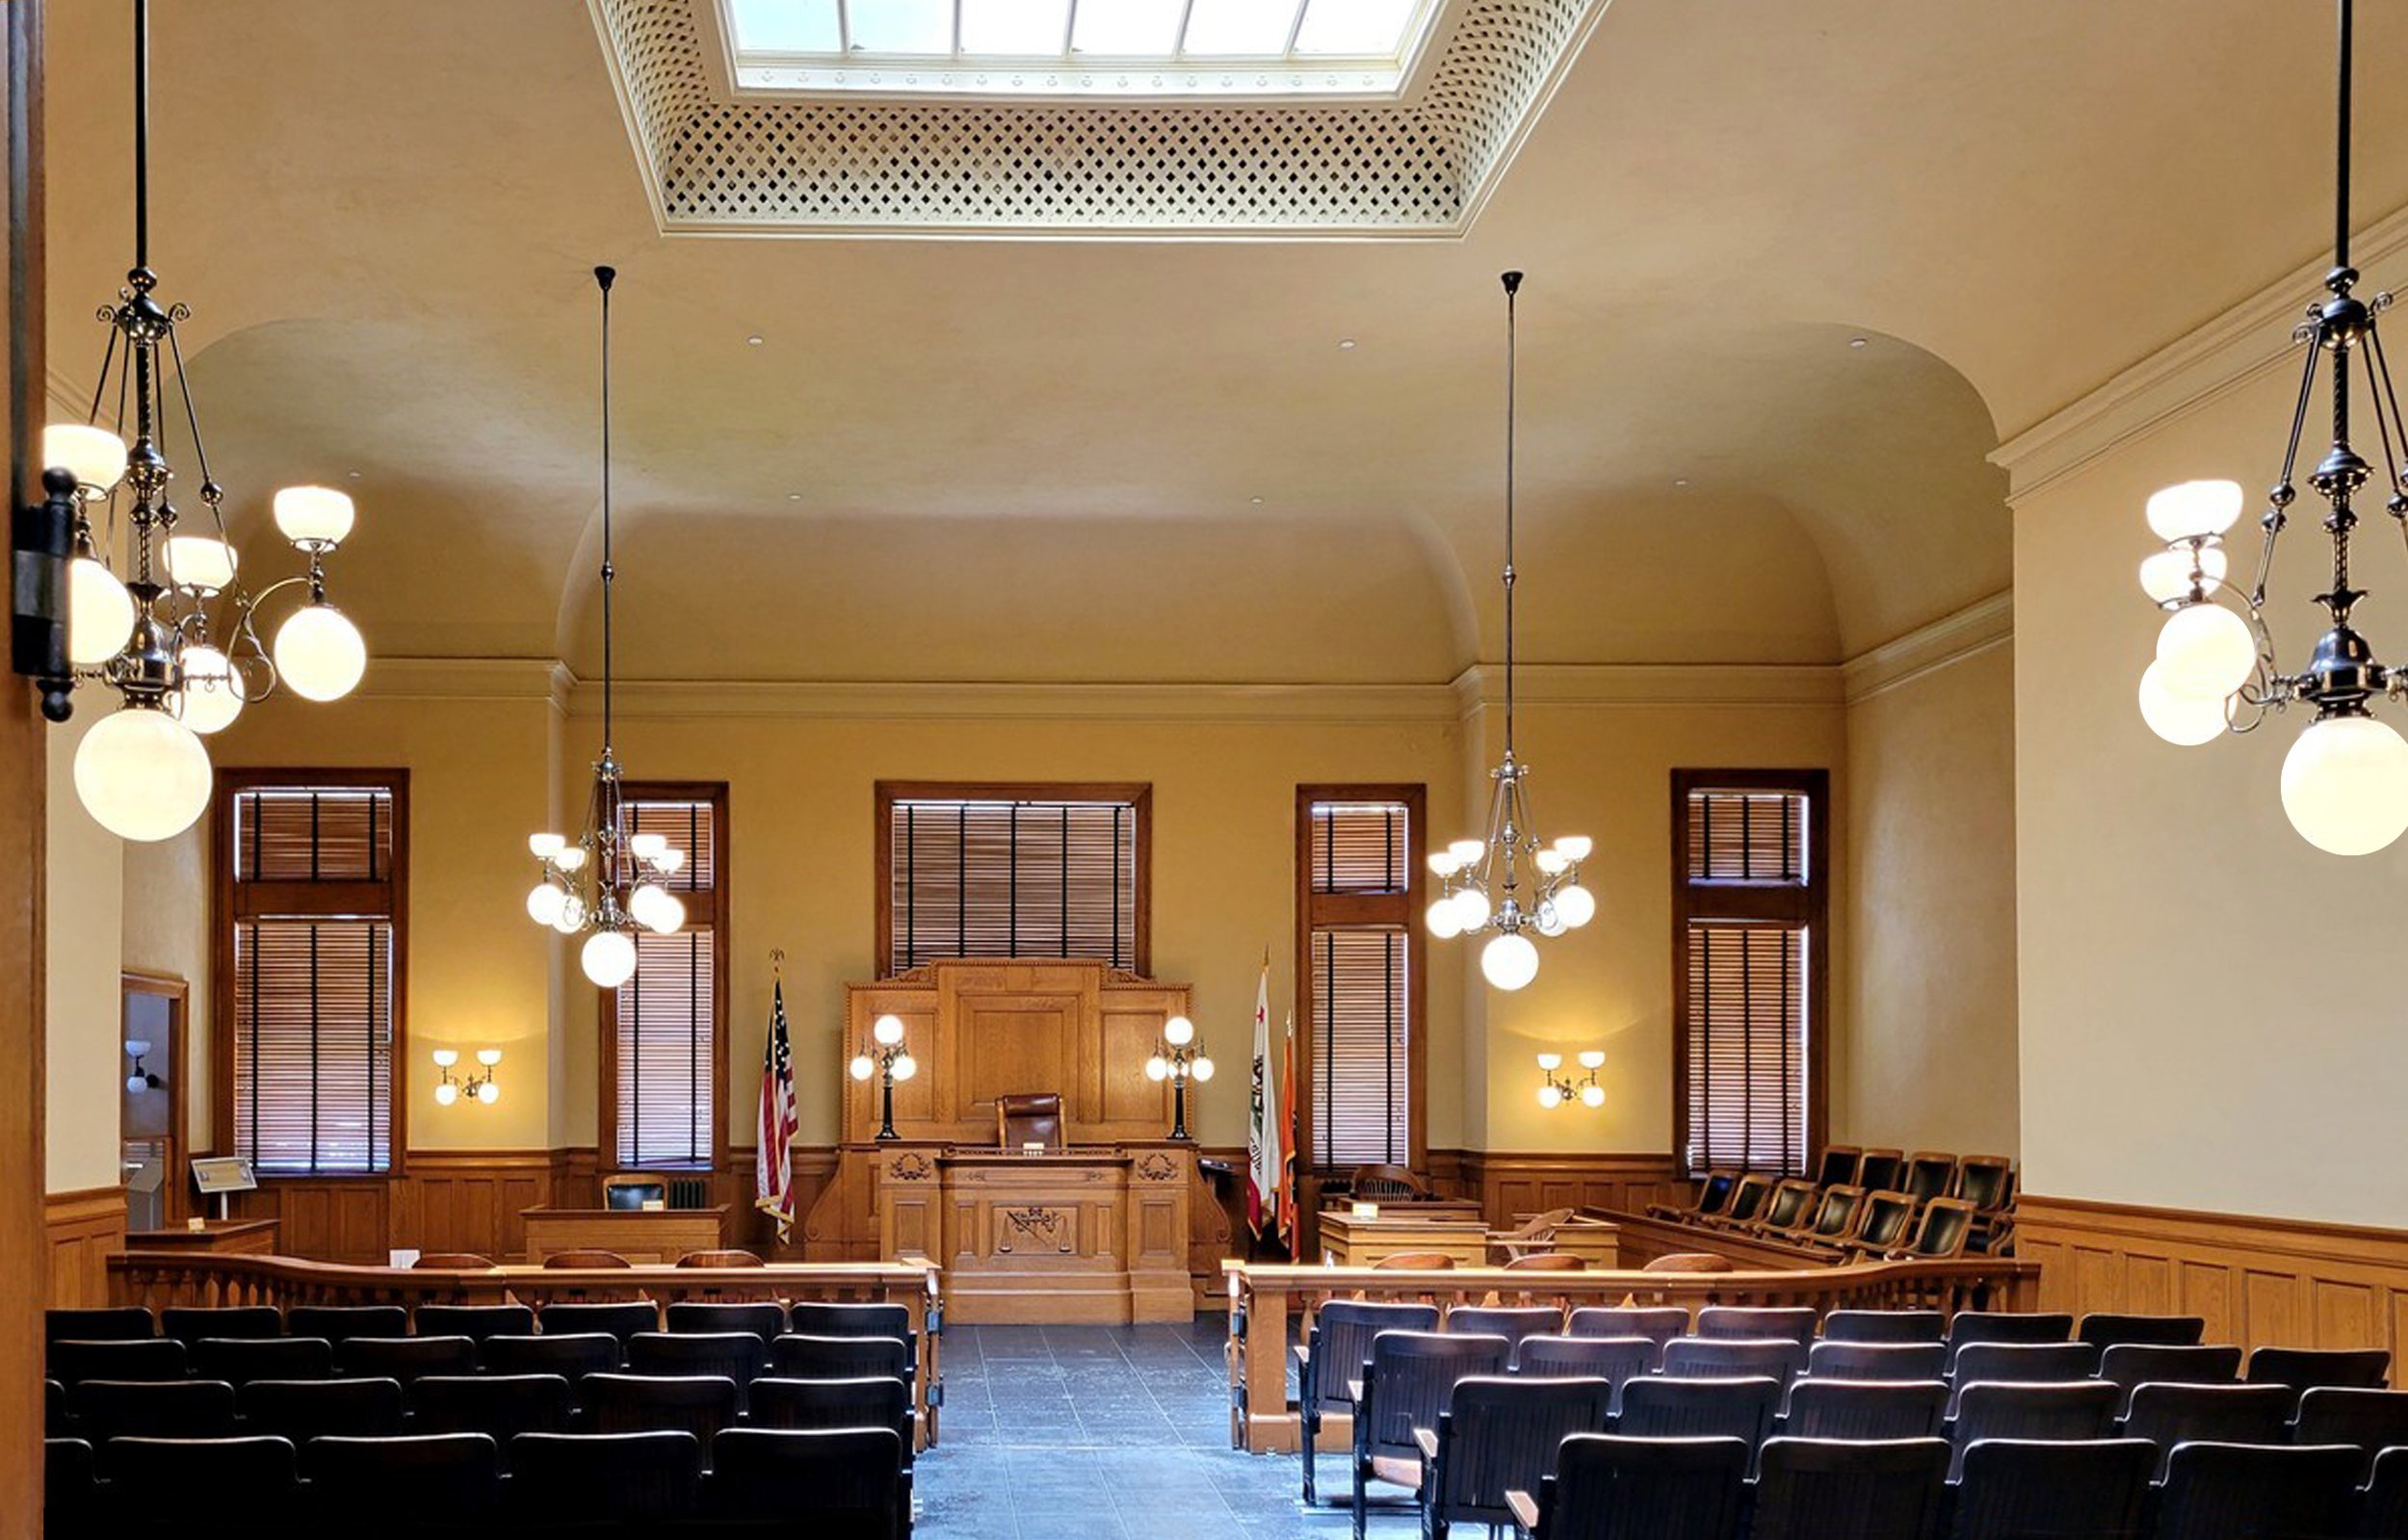 Old Orange County Courthouse: replicate - Santa Ana, CA